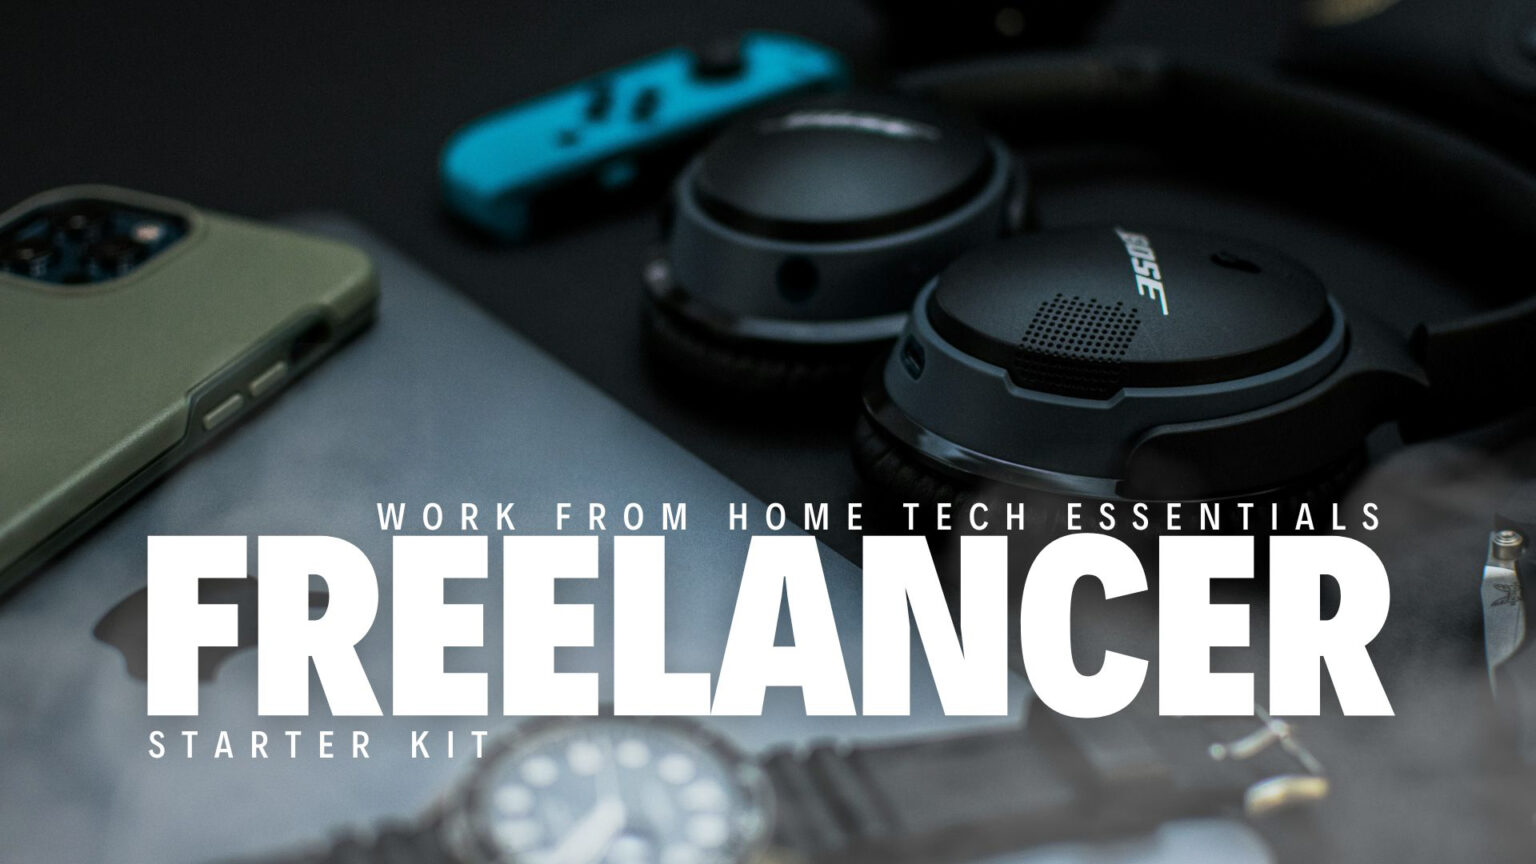 Work From Home Tech Essentials: Freelancer Starter Kit